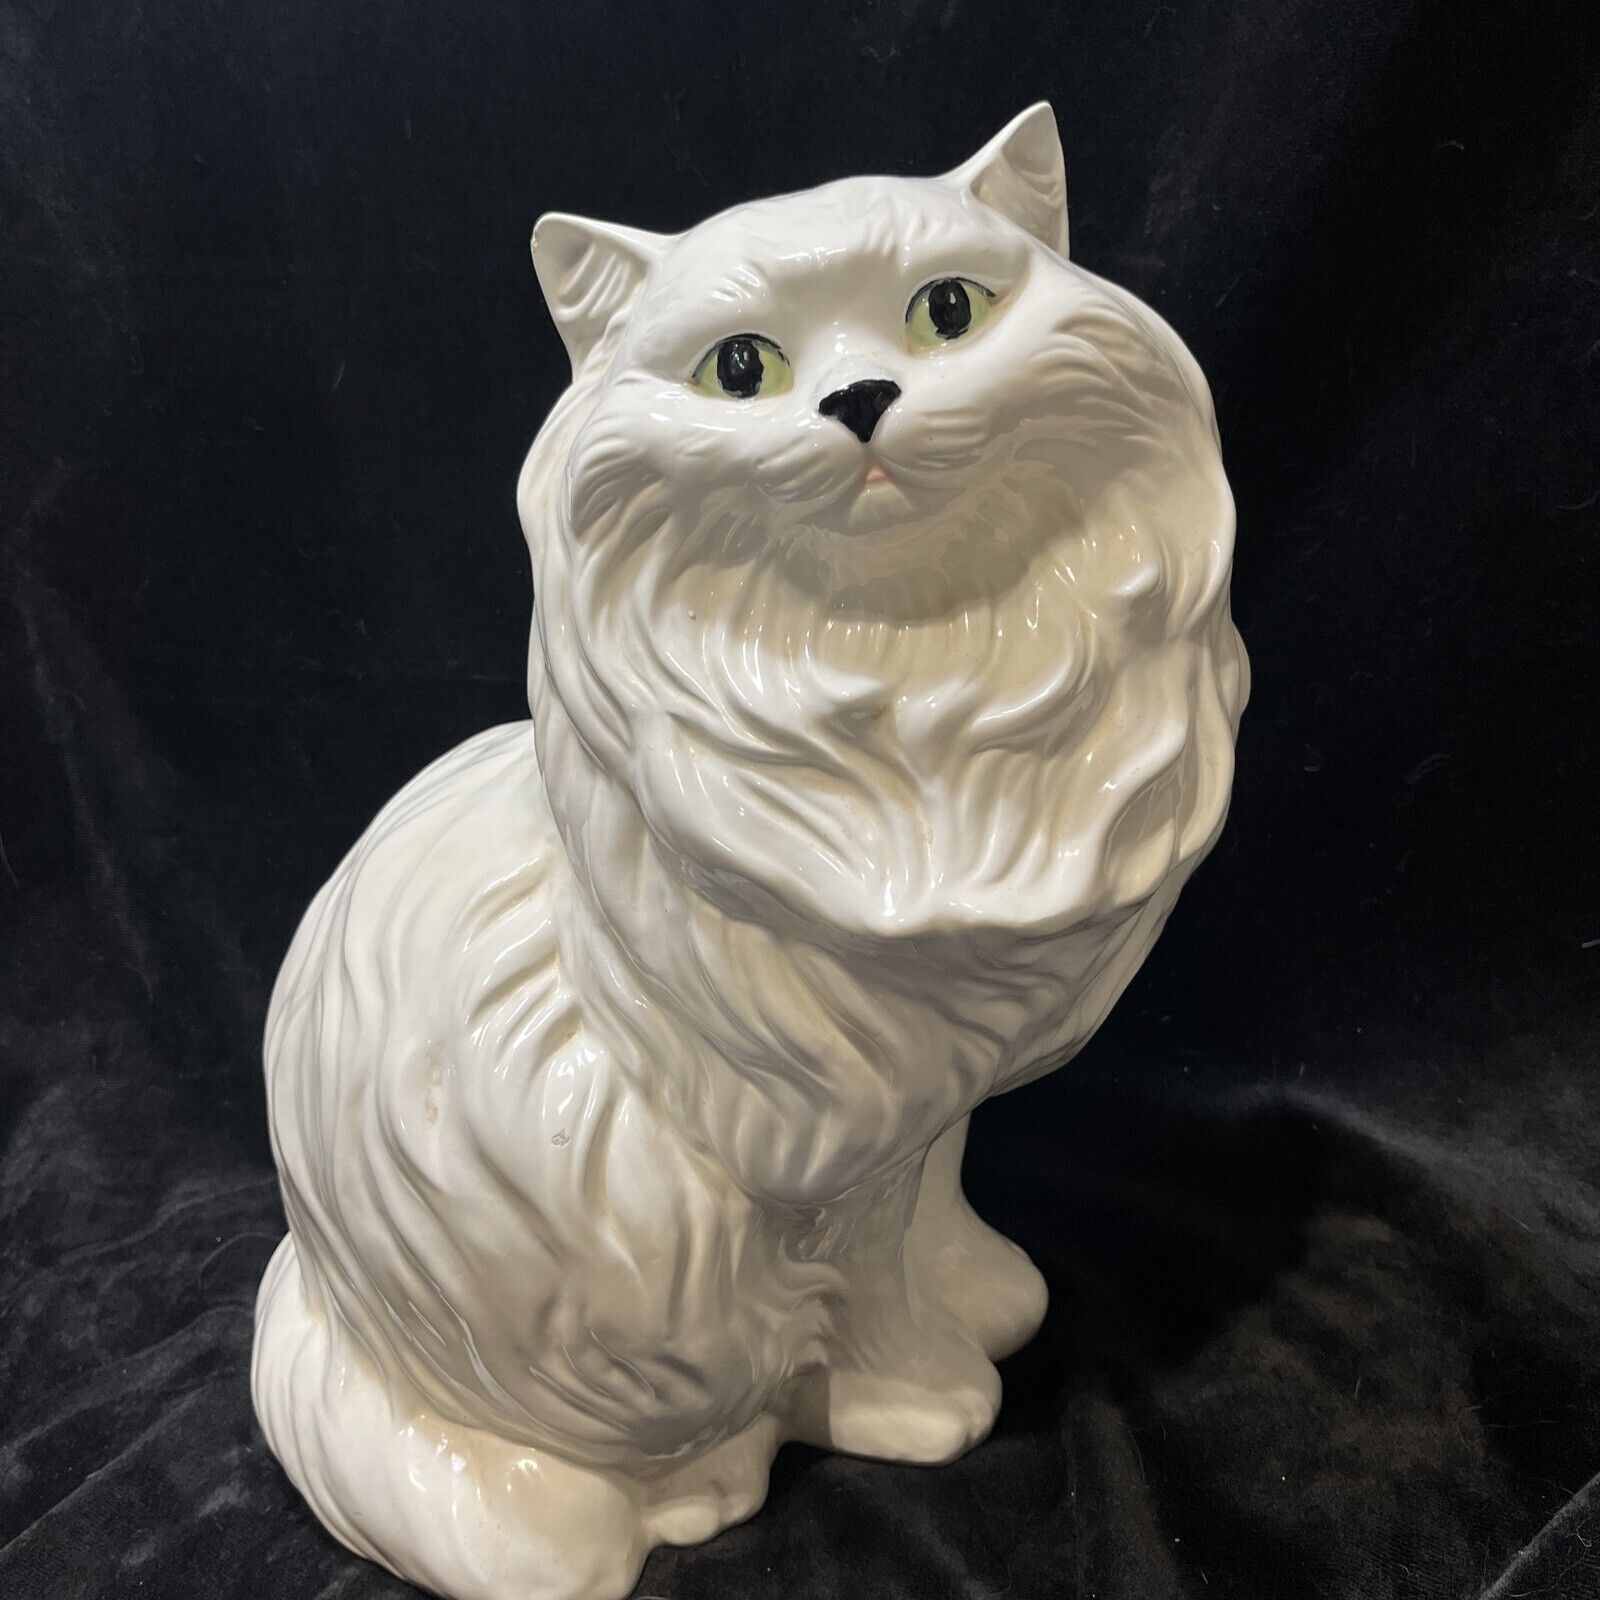 Vintage Large White Ceramic Persian Cat Statue Figurine Sitting 14” tall